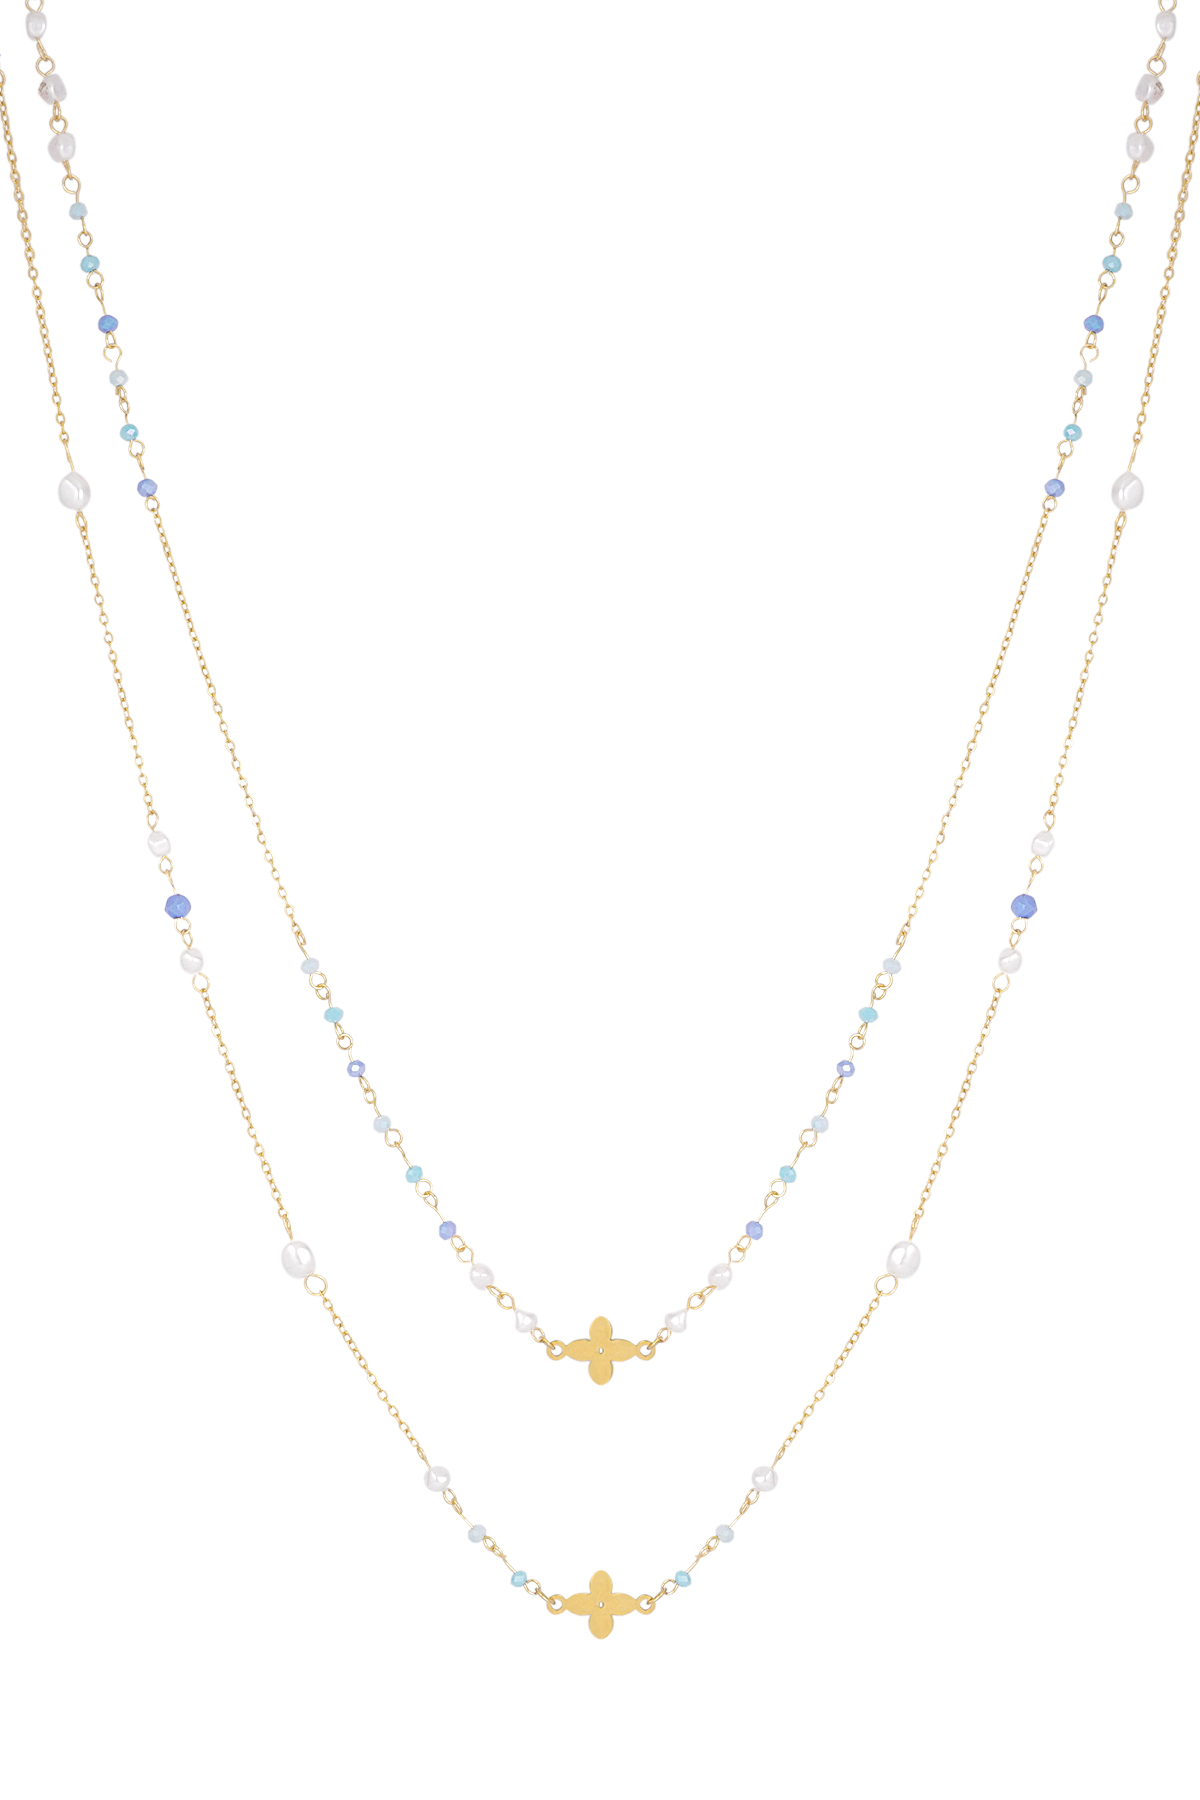 Double clover necklace - blue/gold 